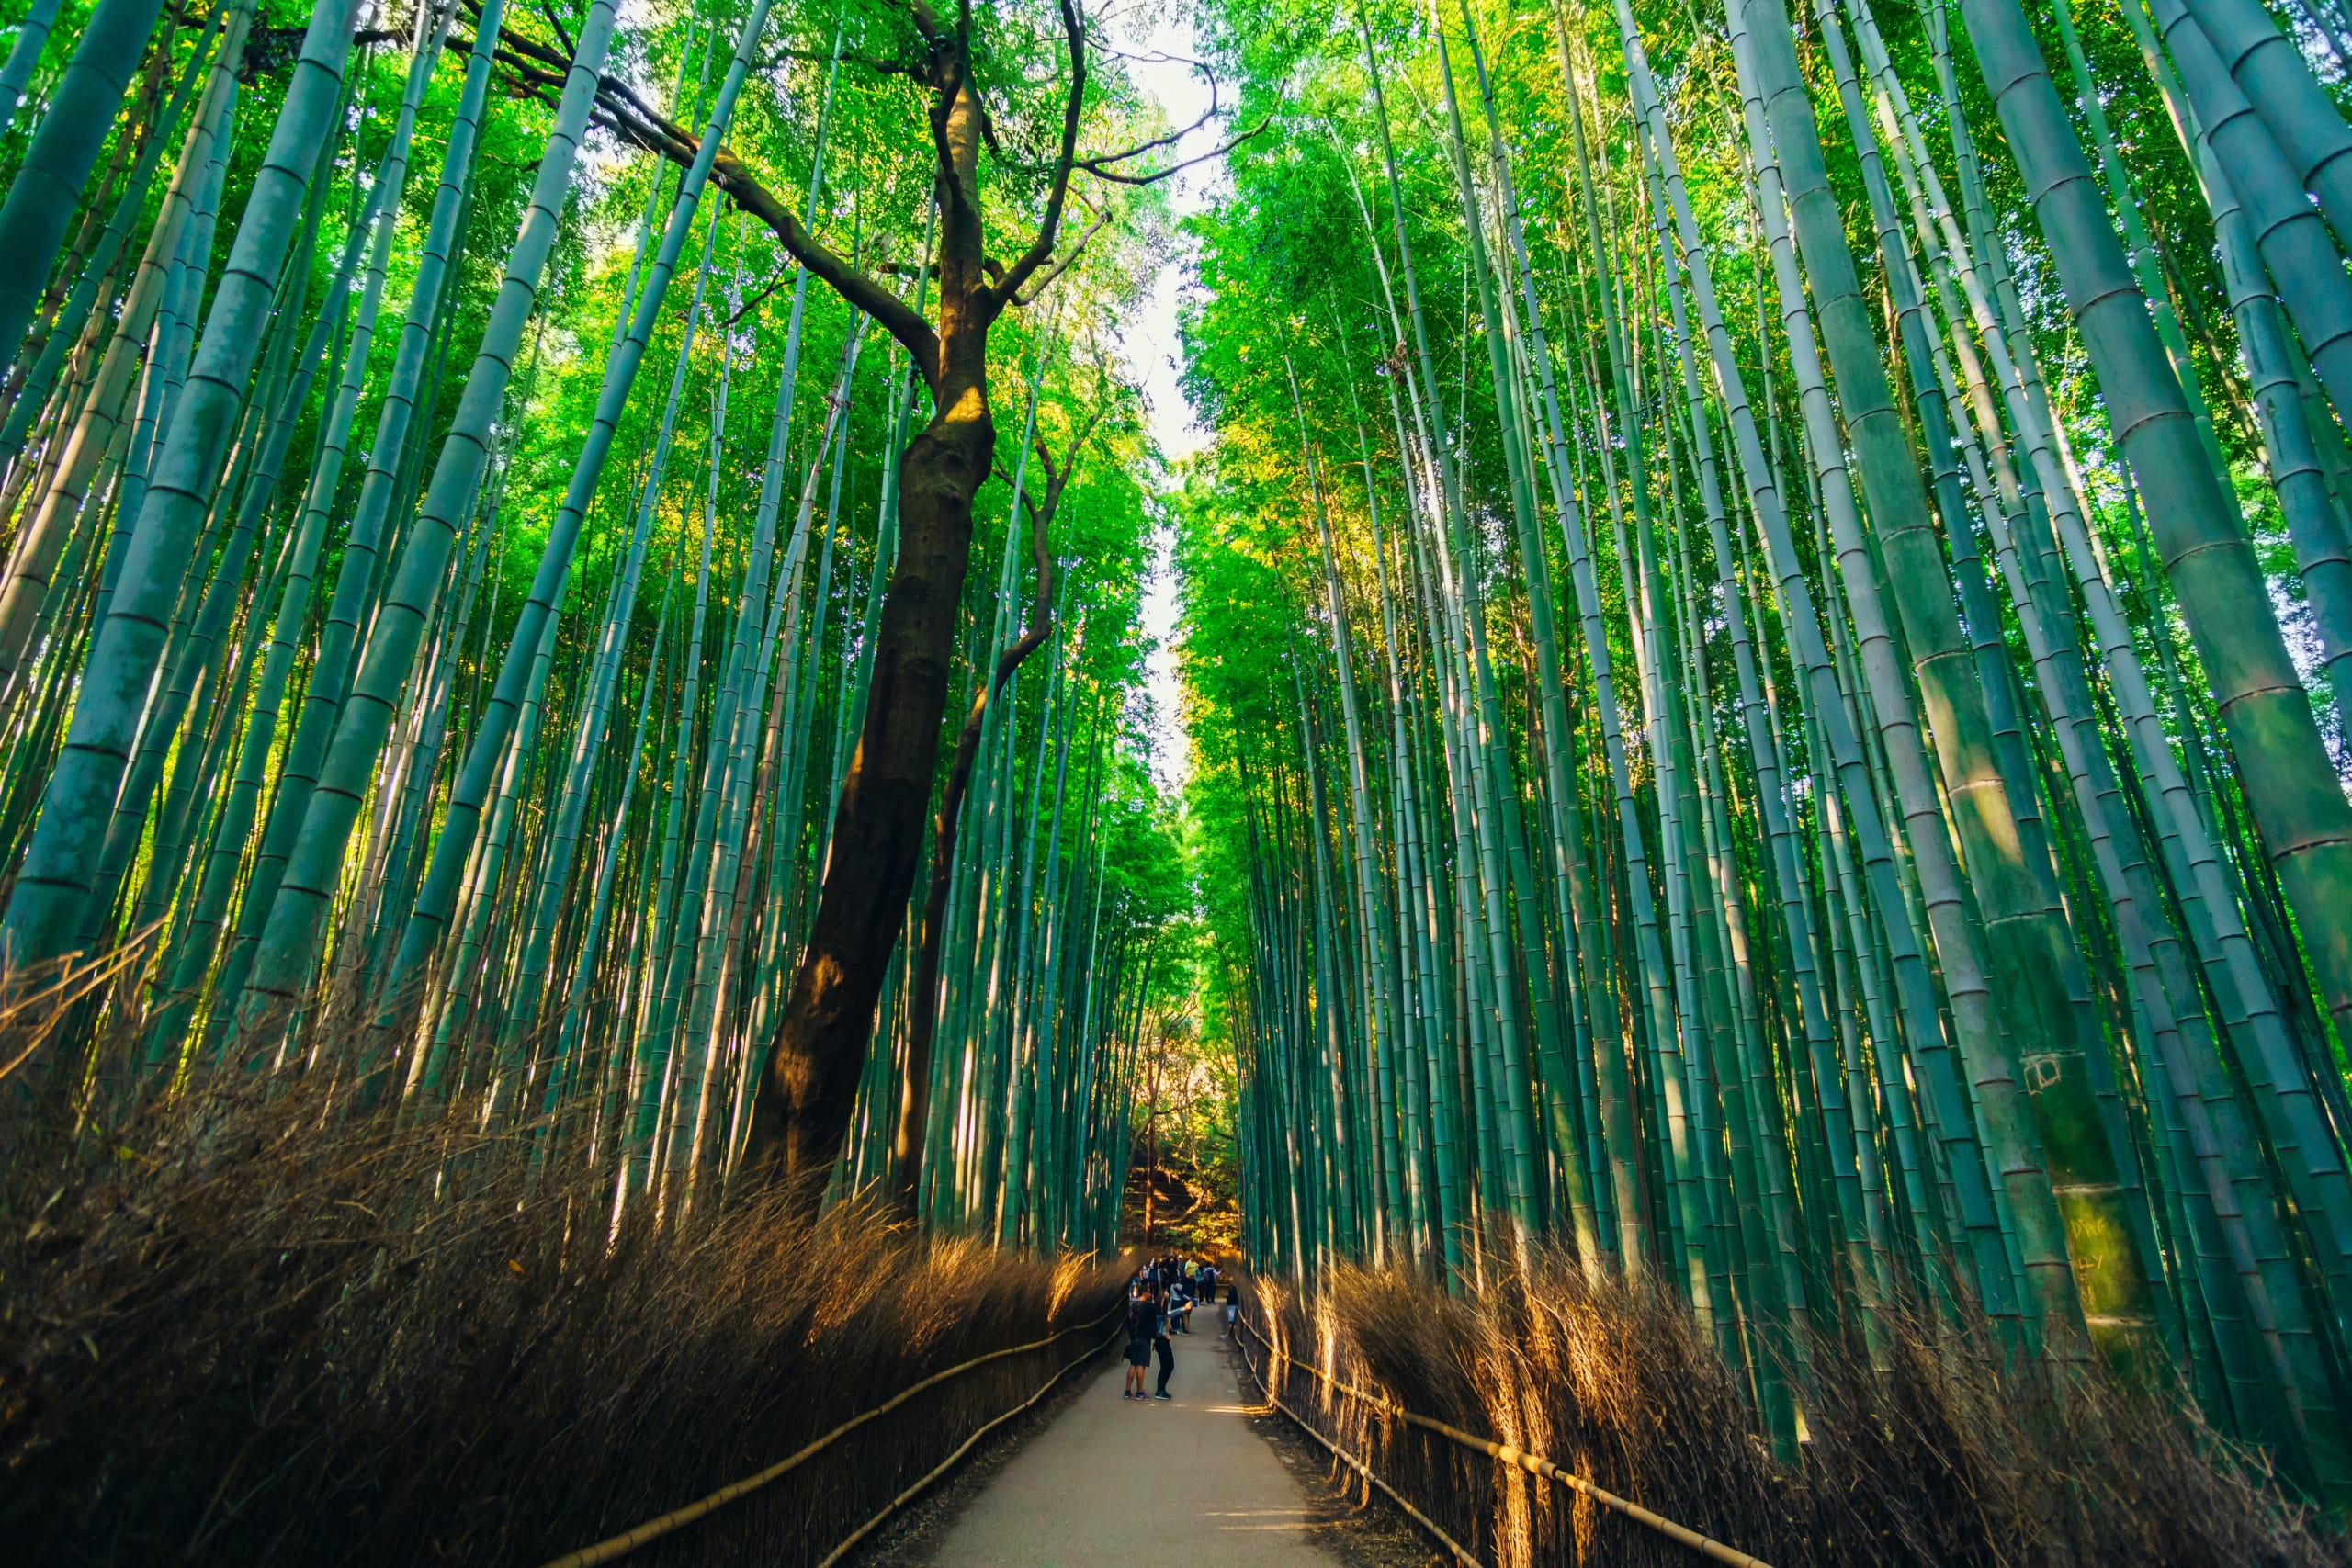 Kyoto Arashiyama and Sagano: 10 Best Things to Do